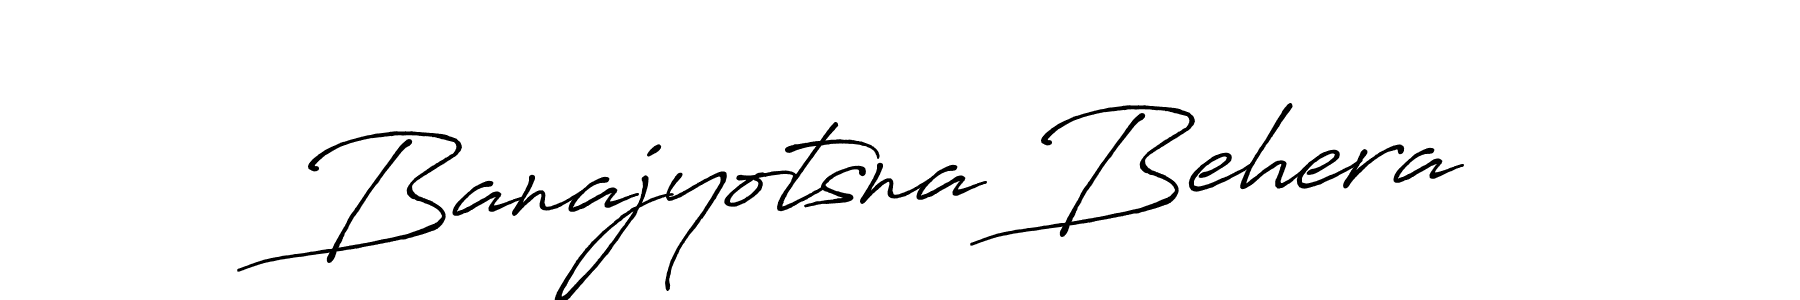 How to Draw Banajyotsna Behera signature style? Antro_Vectra_Bolder is a latest design signature styles for name Banajyotsna Behera. Banajyotsna Behera signature style 7 images and pictures png